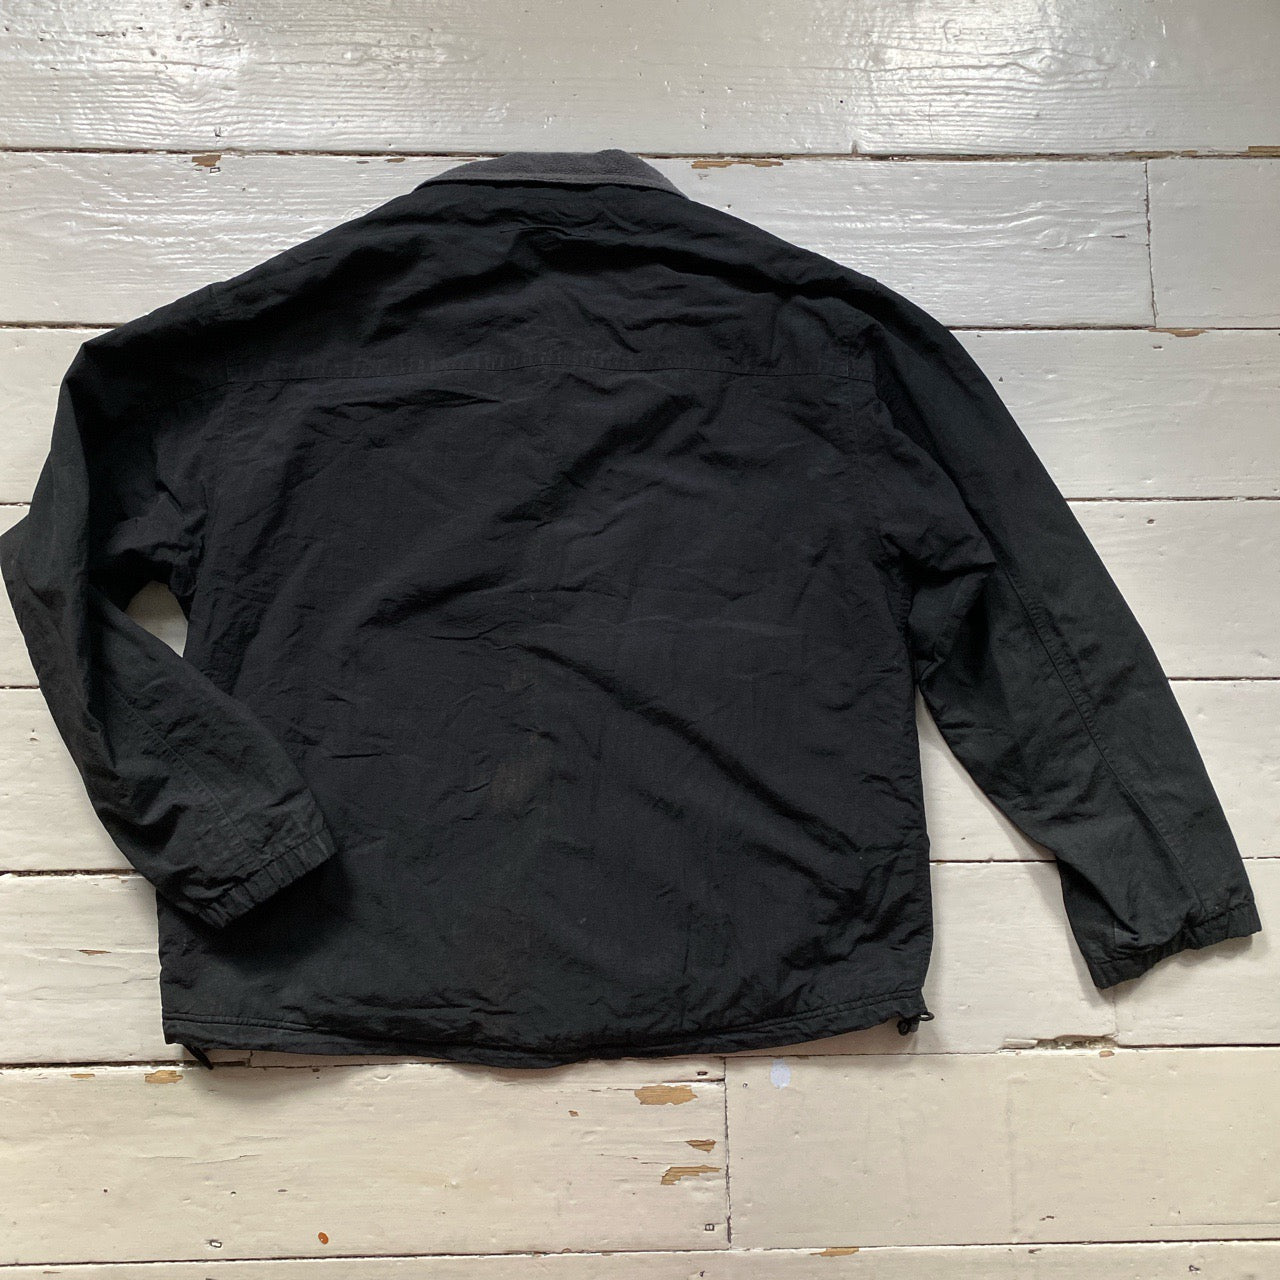 Timberland Fleece Lined Jacket (XL)